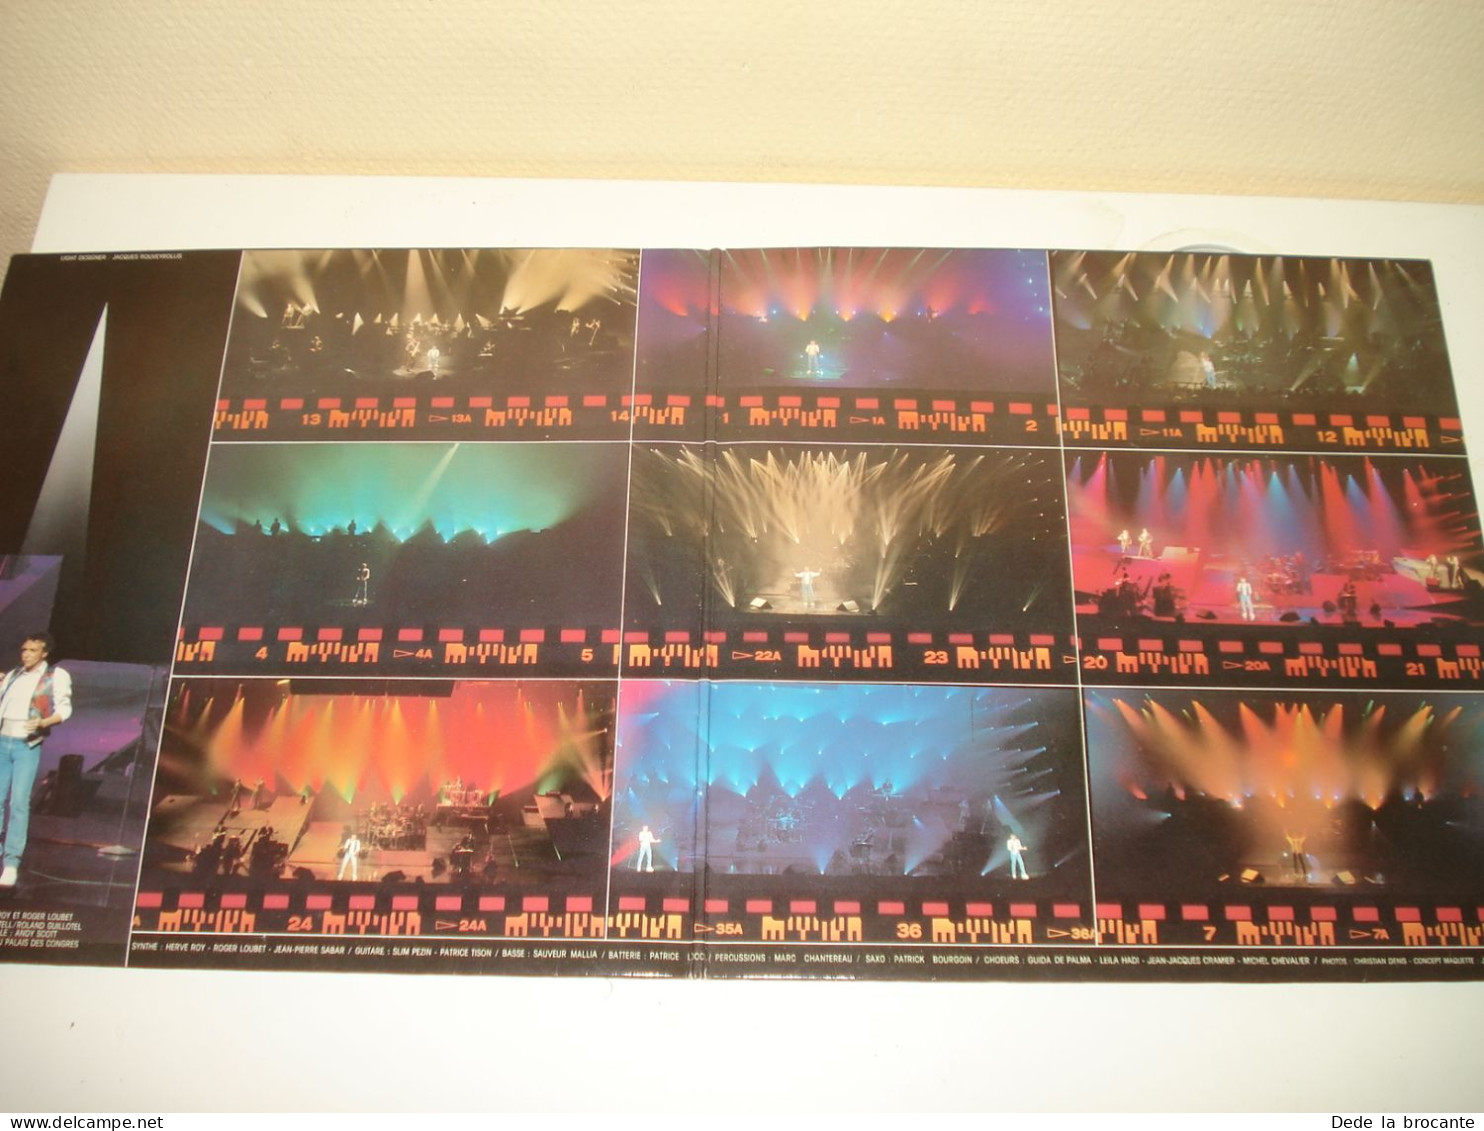 B14 / Michel Sardou – Concert 87 - 2 X LP  Trema – 310 241/242 - FR 1987 - EX/EX - Disco & Pop